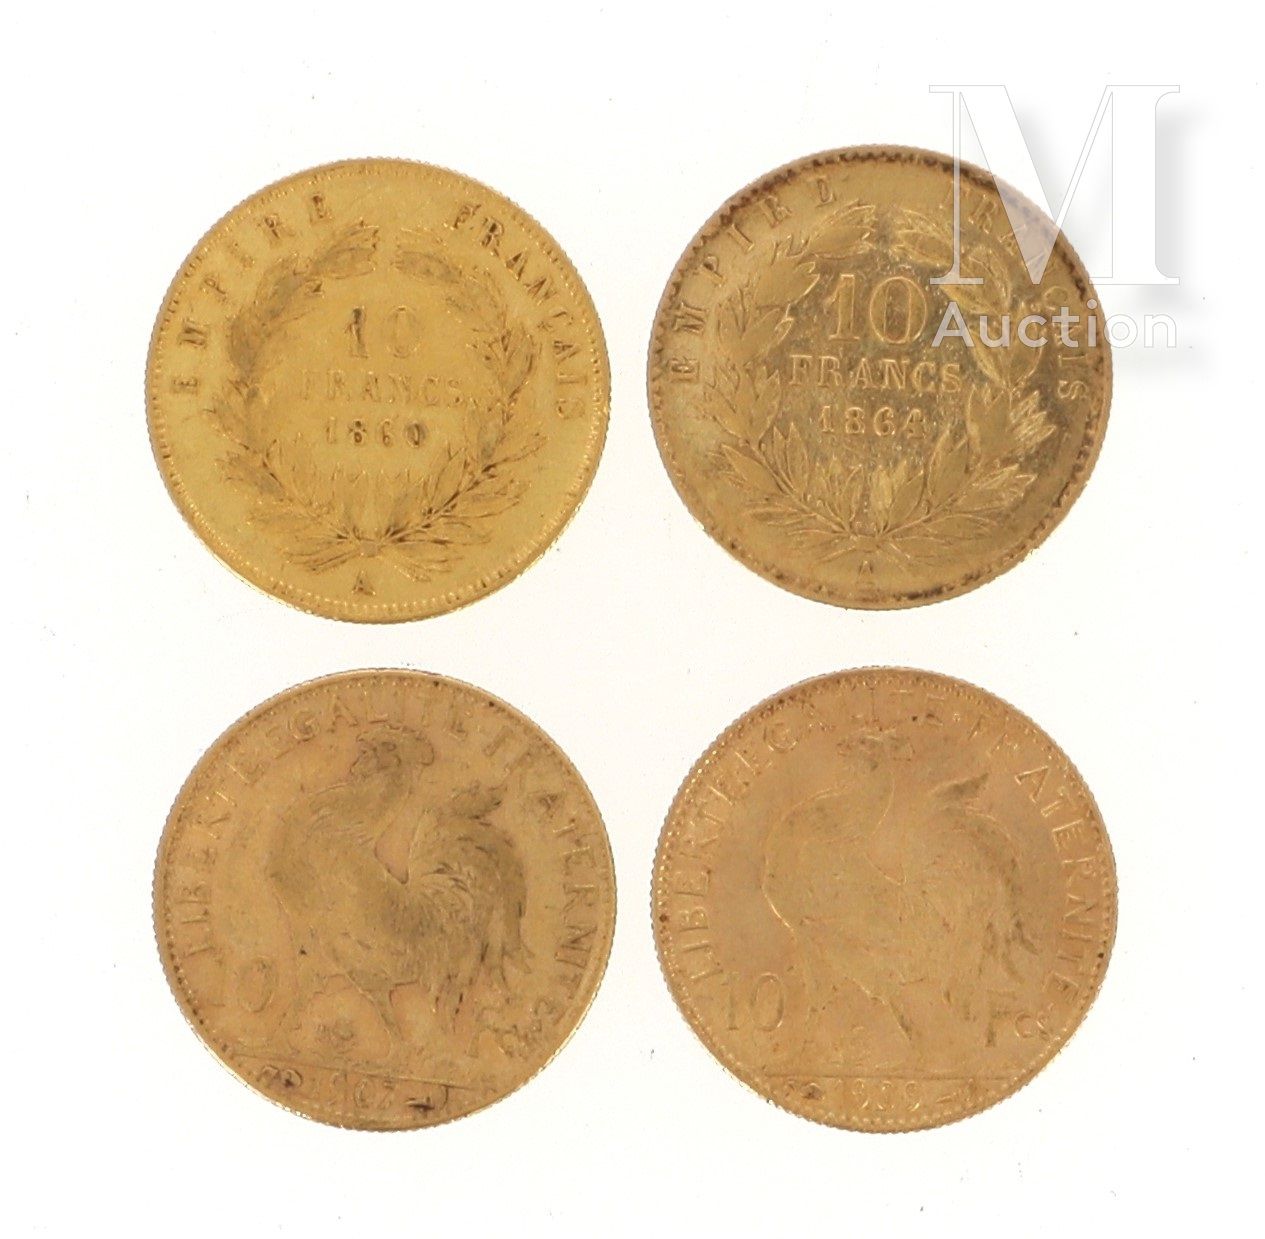 Quatre pièces 10 FF or Quatre pièces en or de 10 FF :

- 1 x 10 FF Napoléon III &hellip;